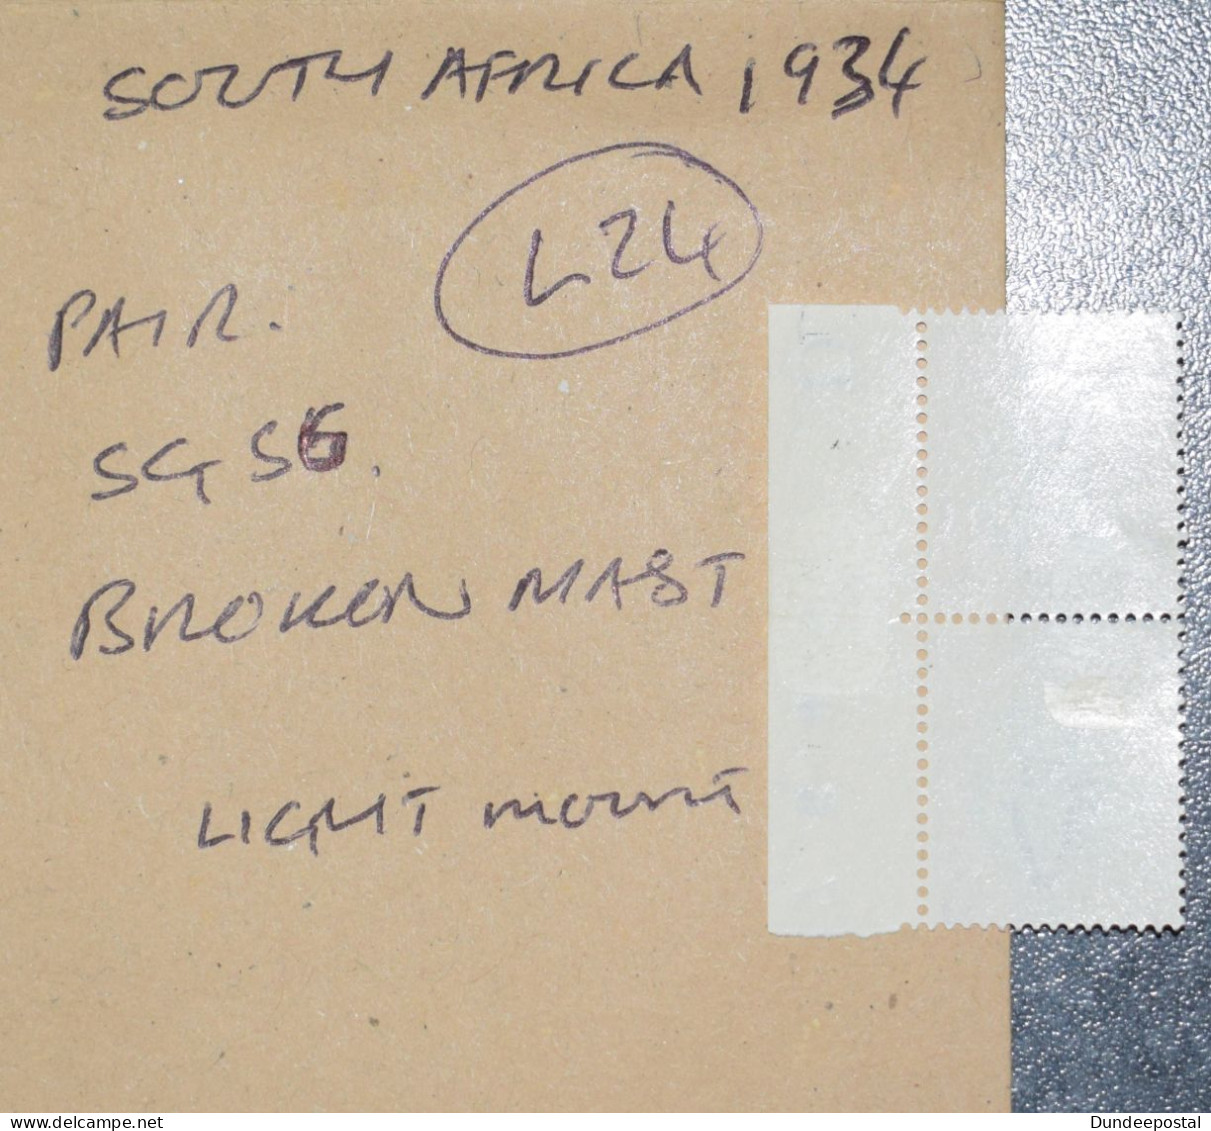 SOUTH AFRICA    STAMPS Drommedaris Ship 1d  1934  L24  ~~L@@K~~ - Unused Stamps